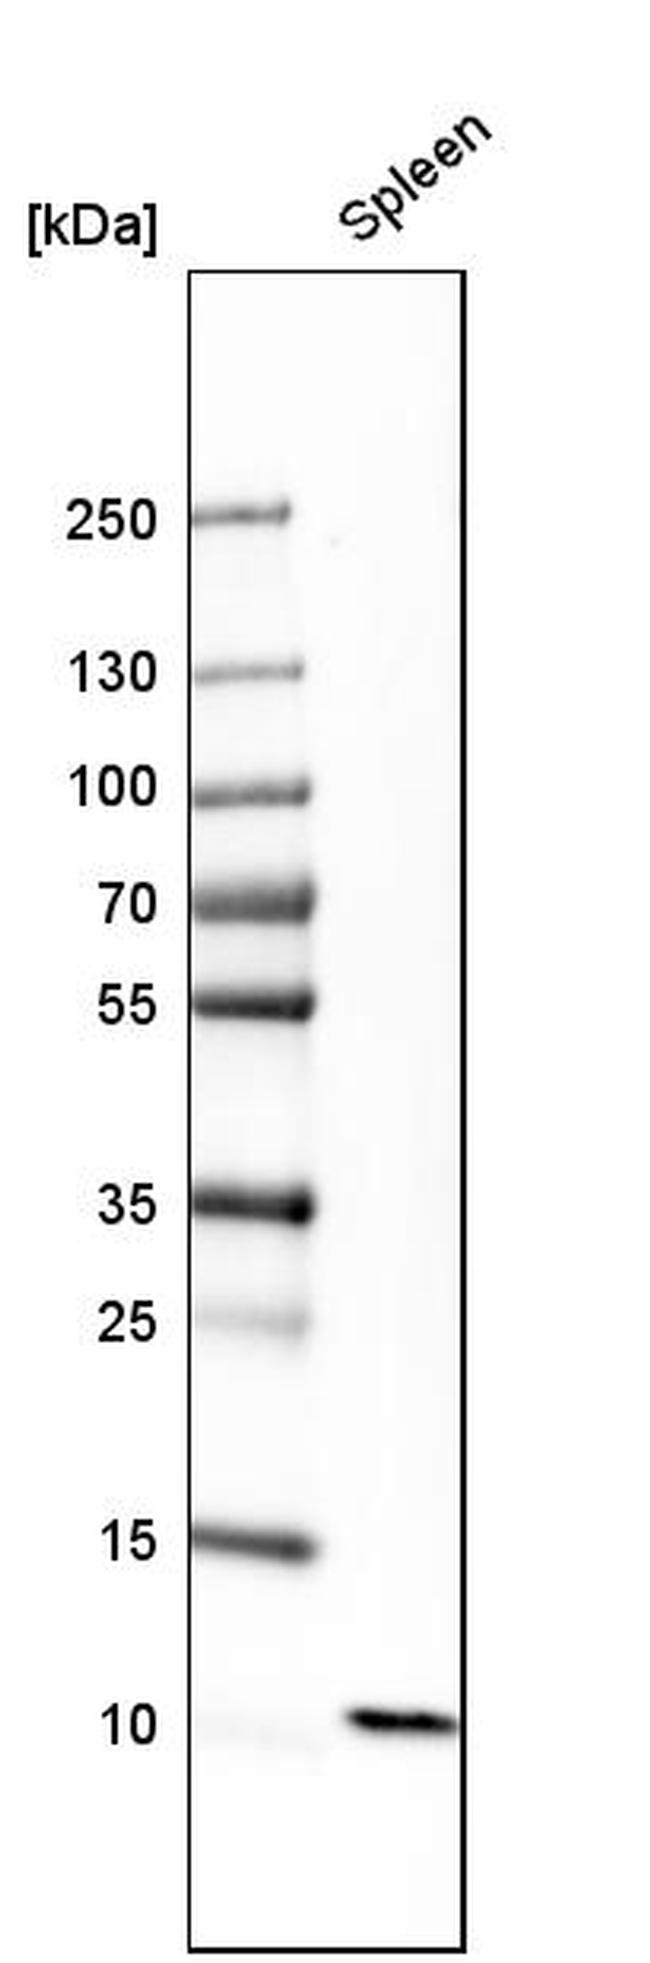 S100A12 Antibody in Western Blot (WB)